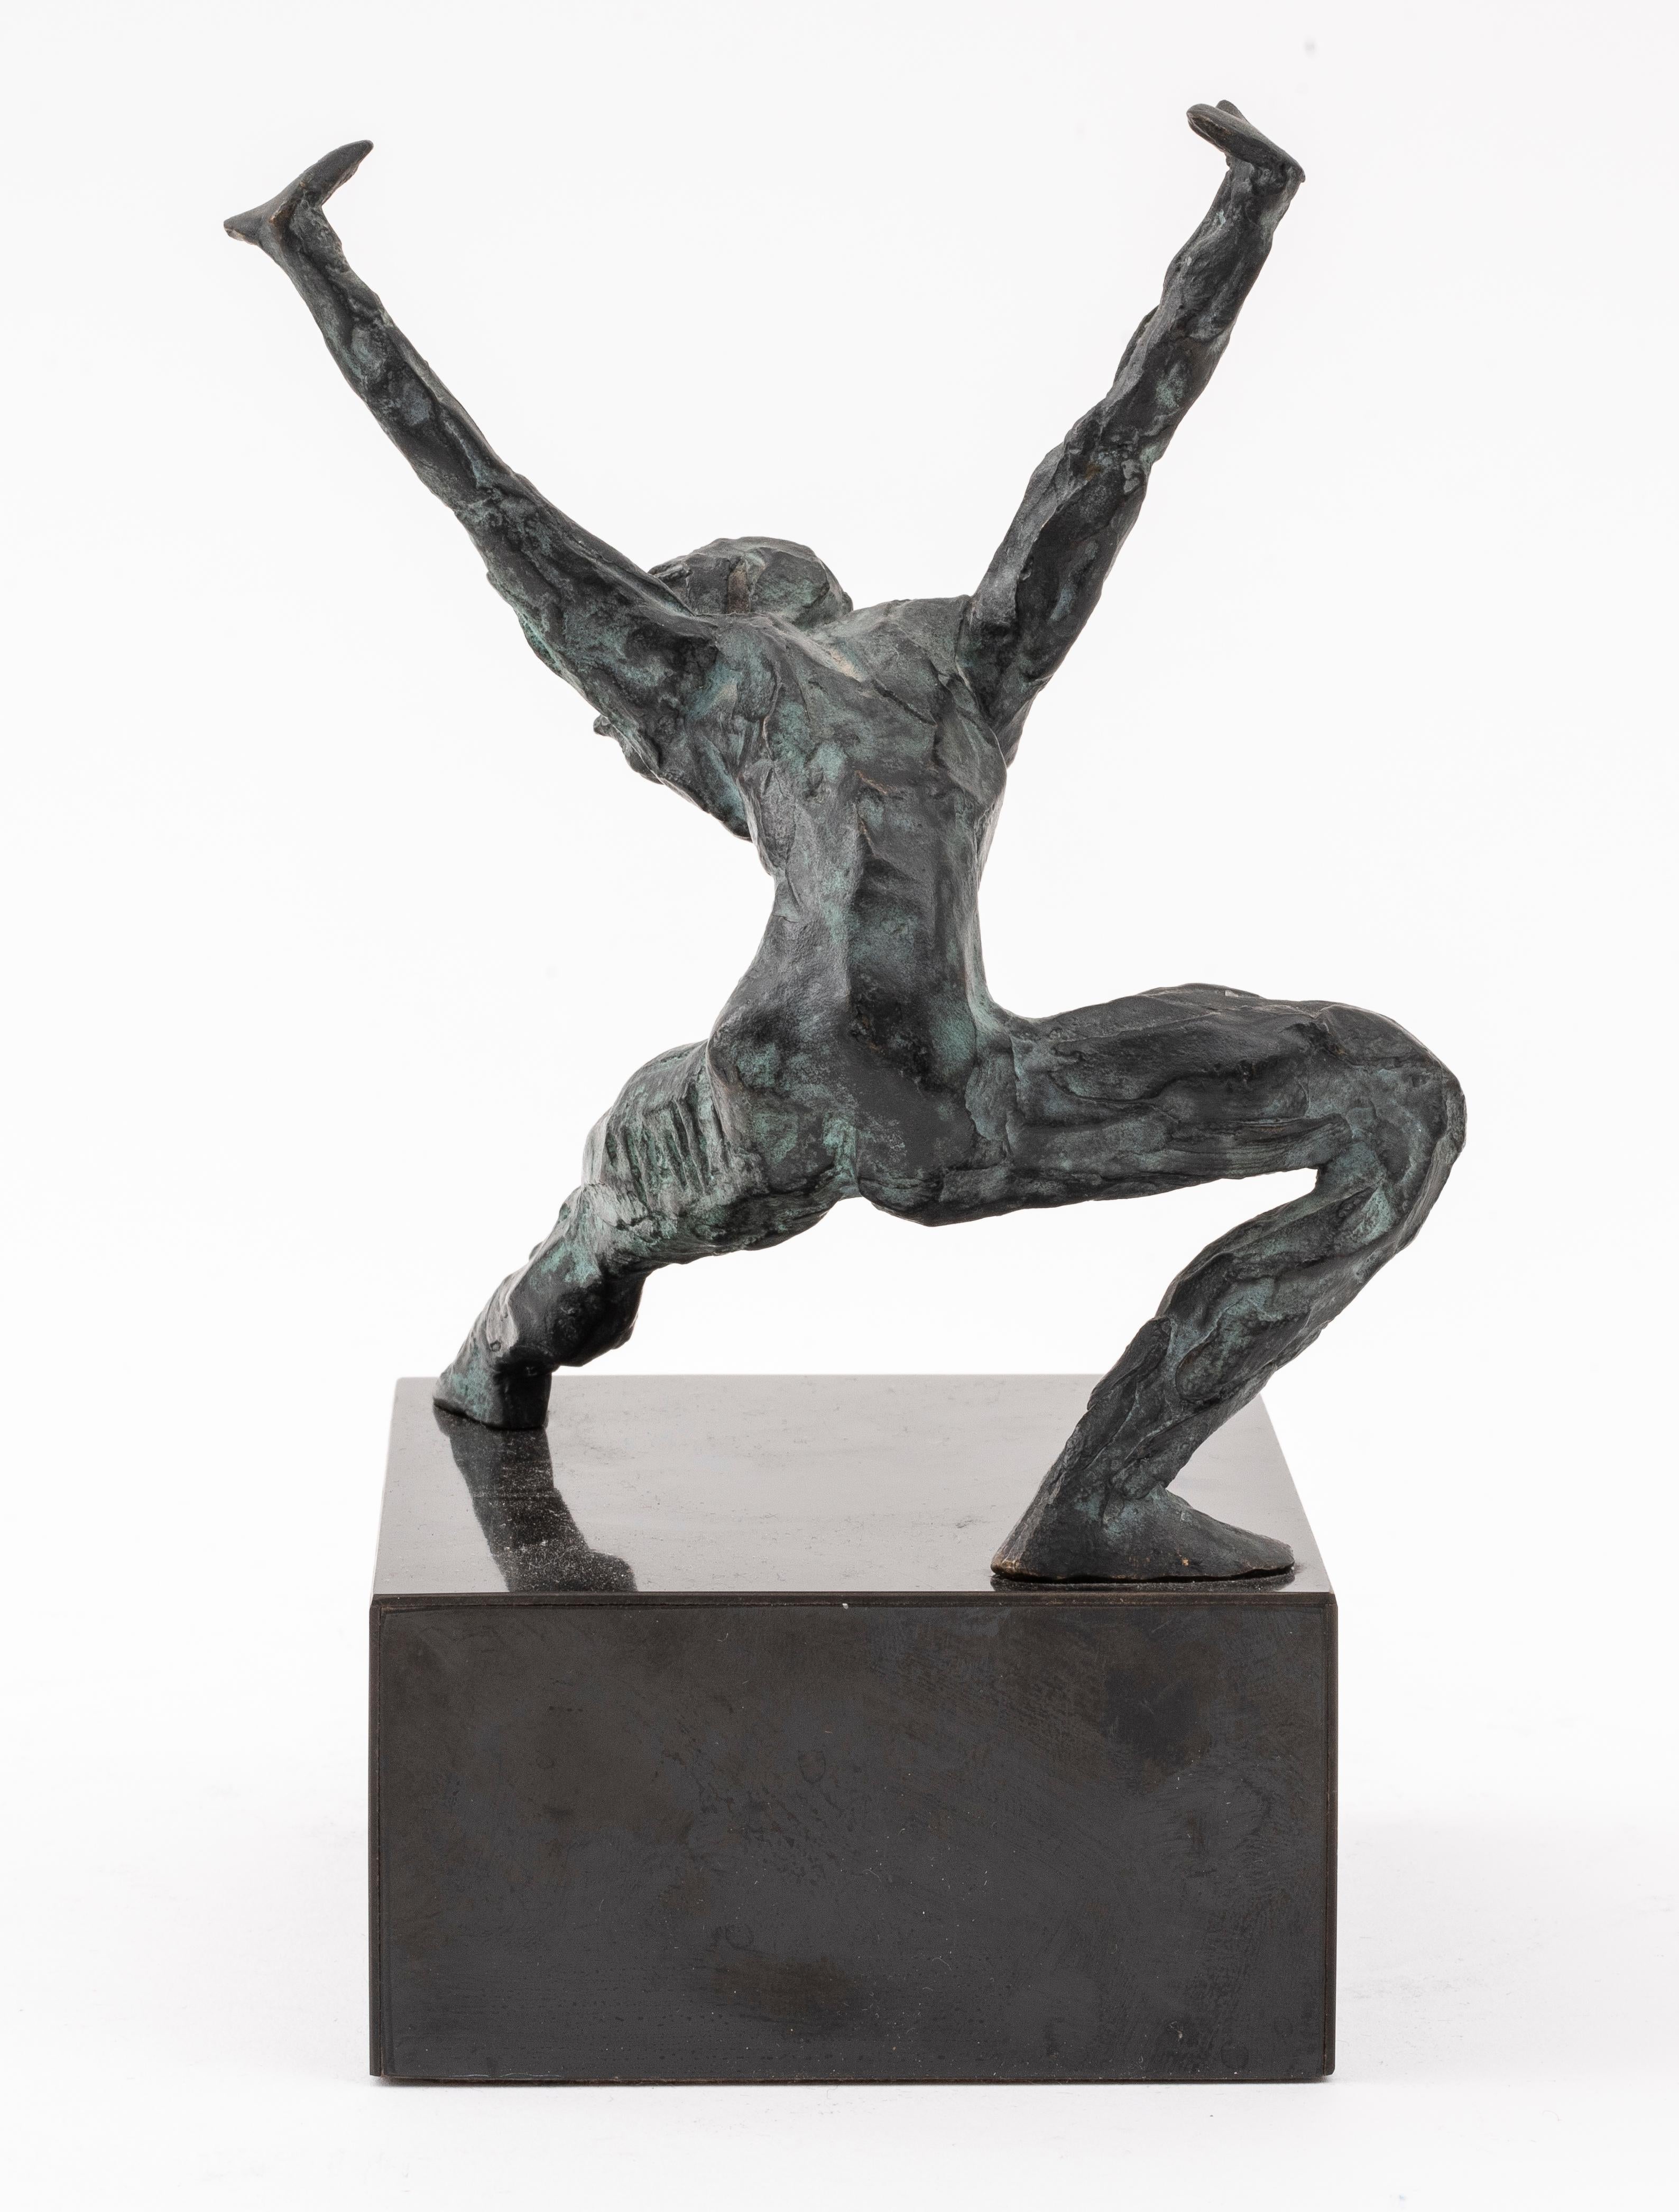 Maher, tanzender männlicher Akt, Bronzeskulptur, signiert, am Sockel befestigt. Maße: 8